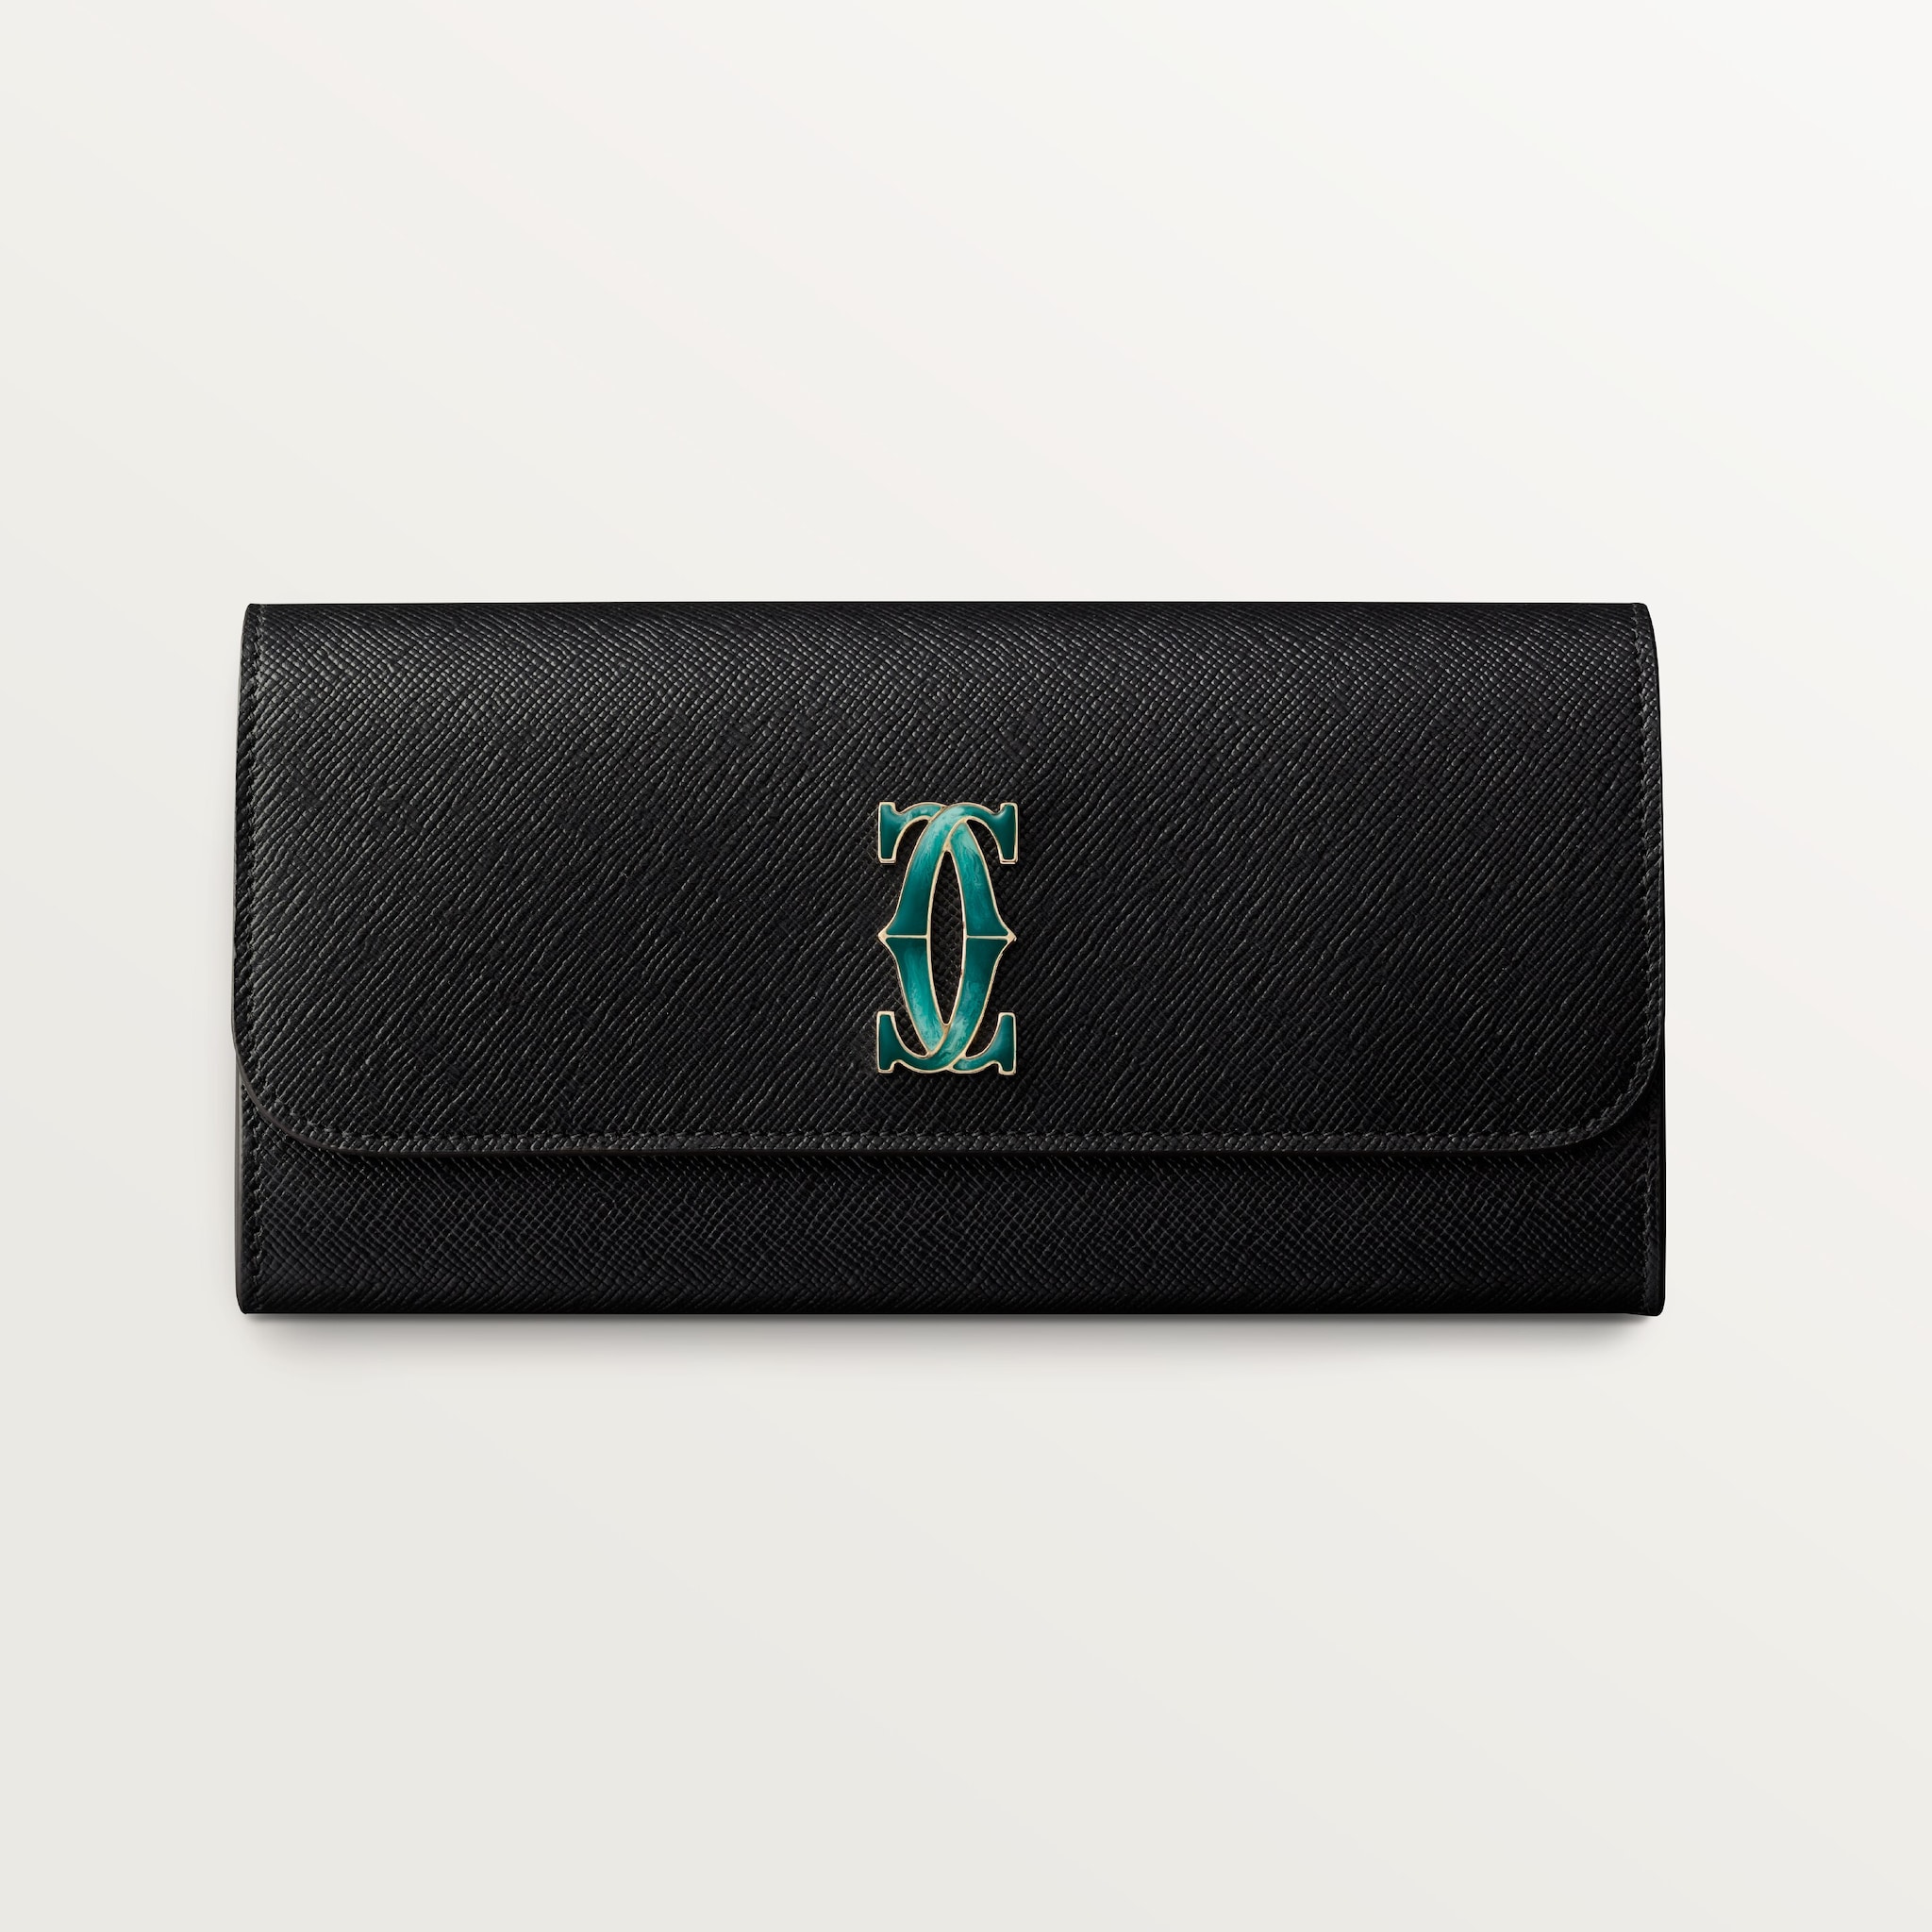 International wallet with flap, C de CartierBlack textured calfskin, golden finish and graduated green enamel